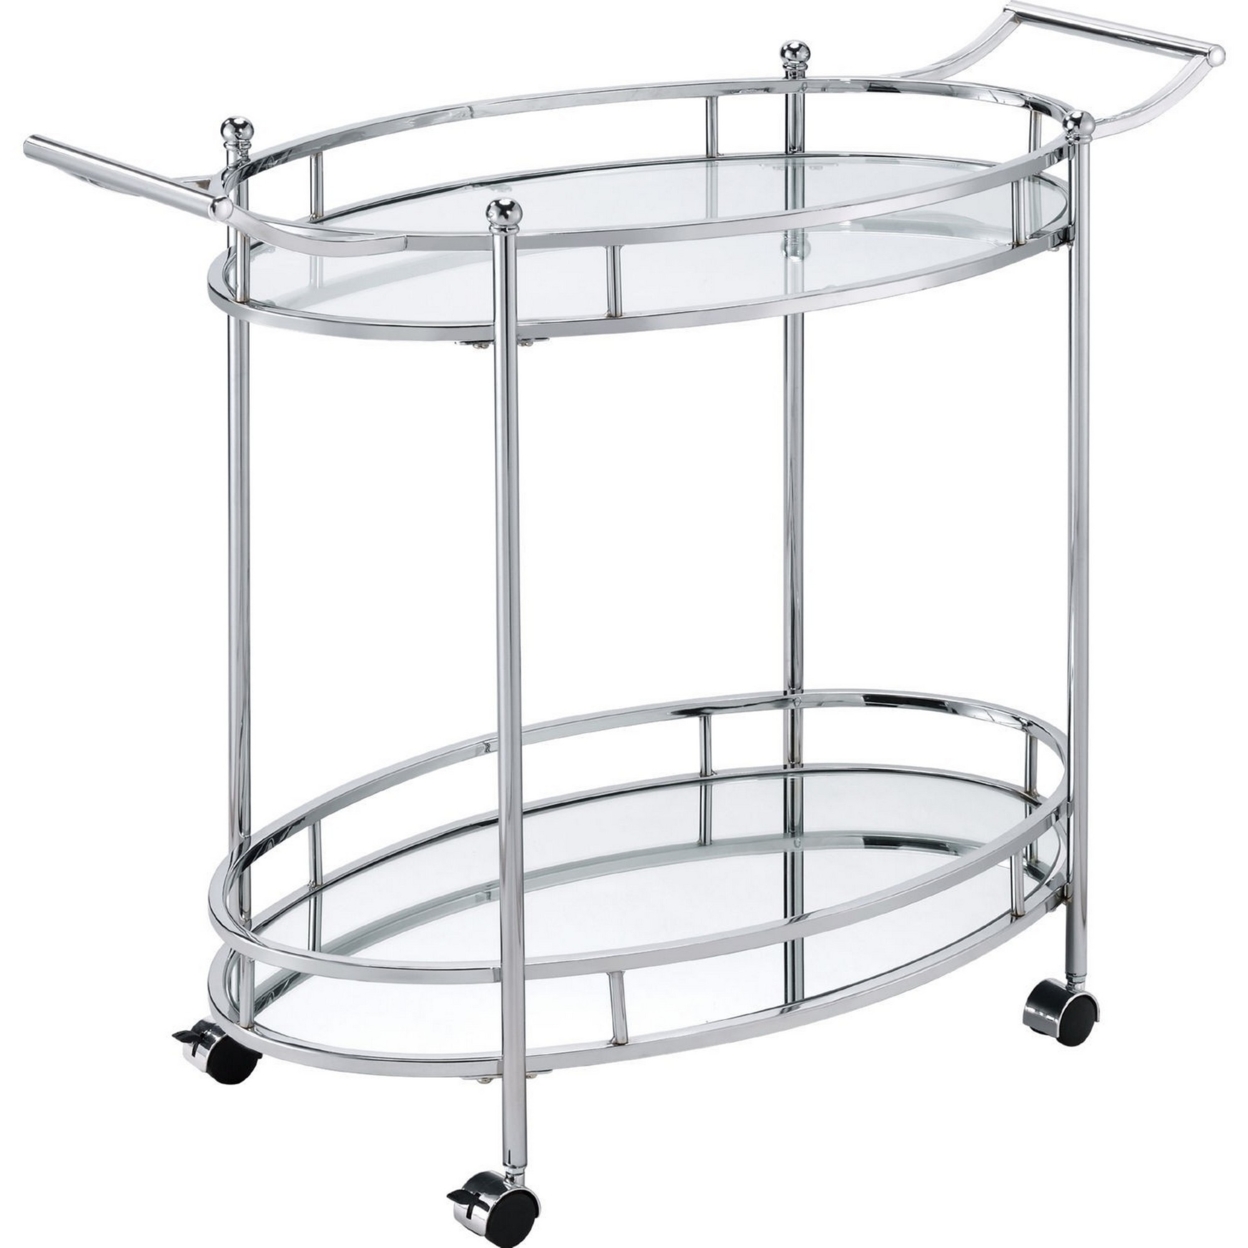 Serving Cart With Tubular Frame And 2 Tier Glass Shelves, Chrome- Saltoro Sherpi